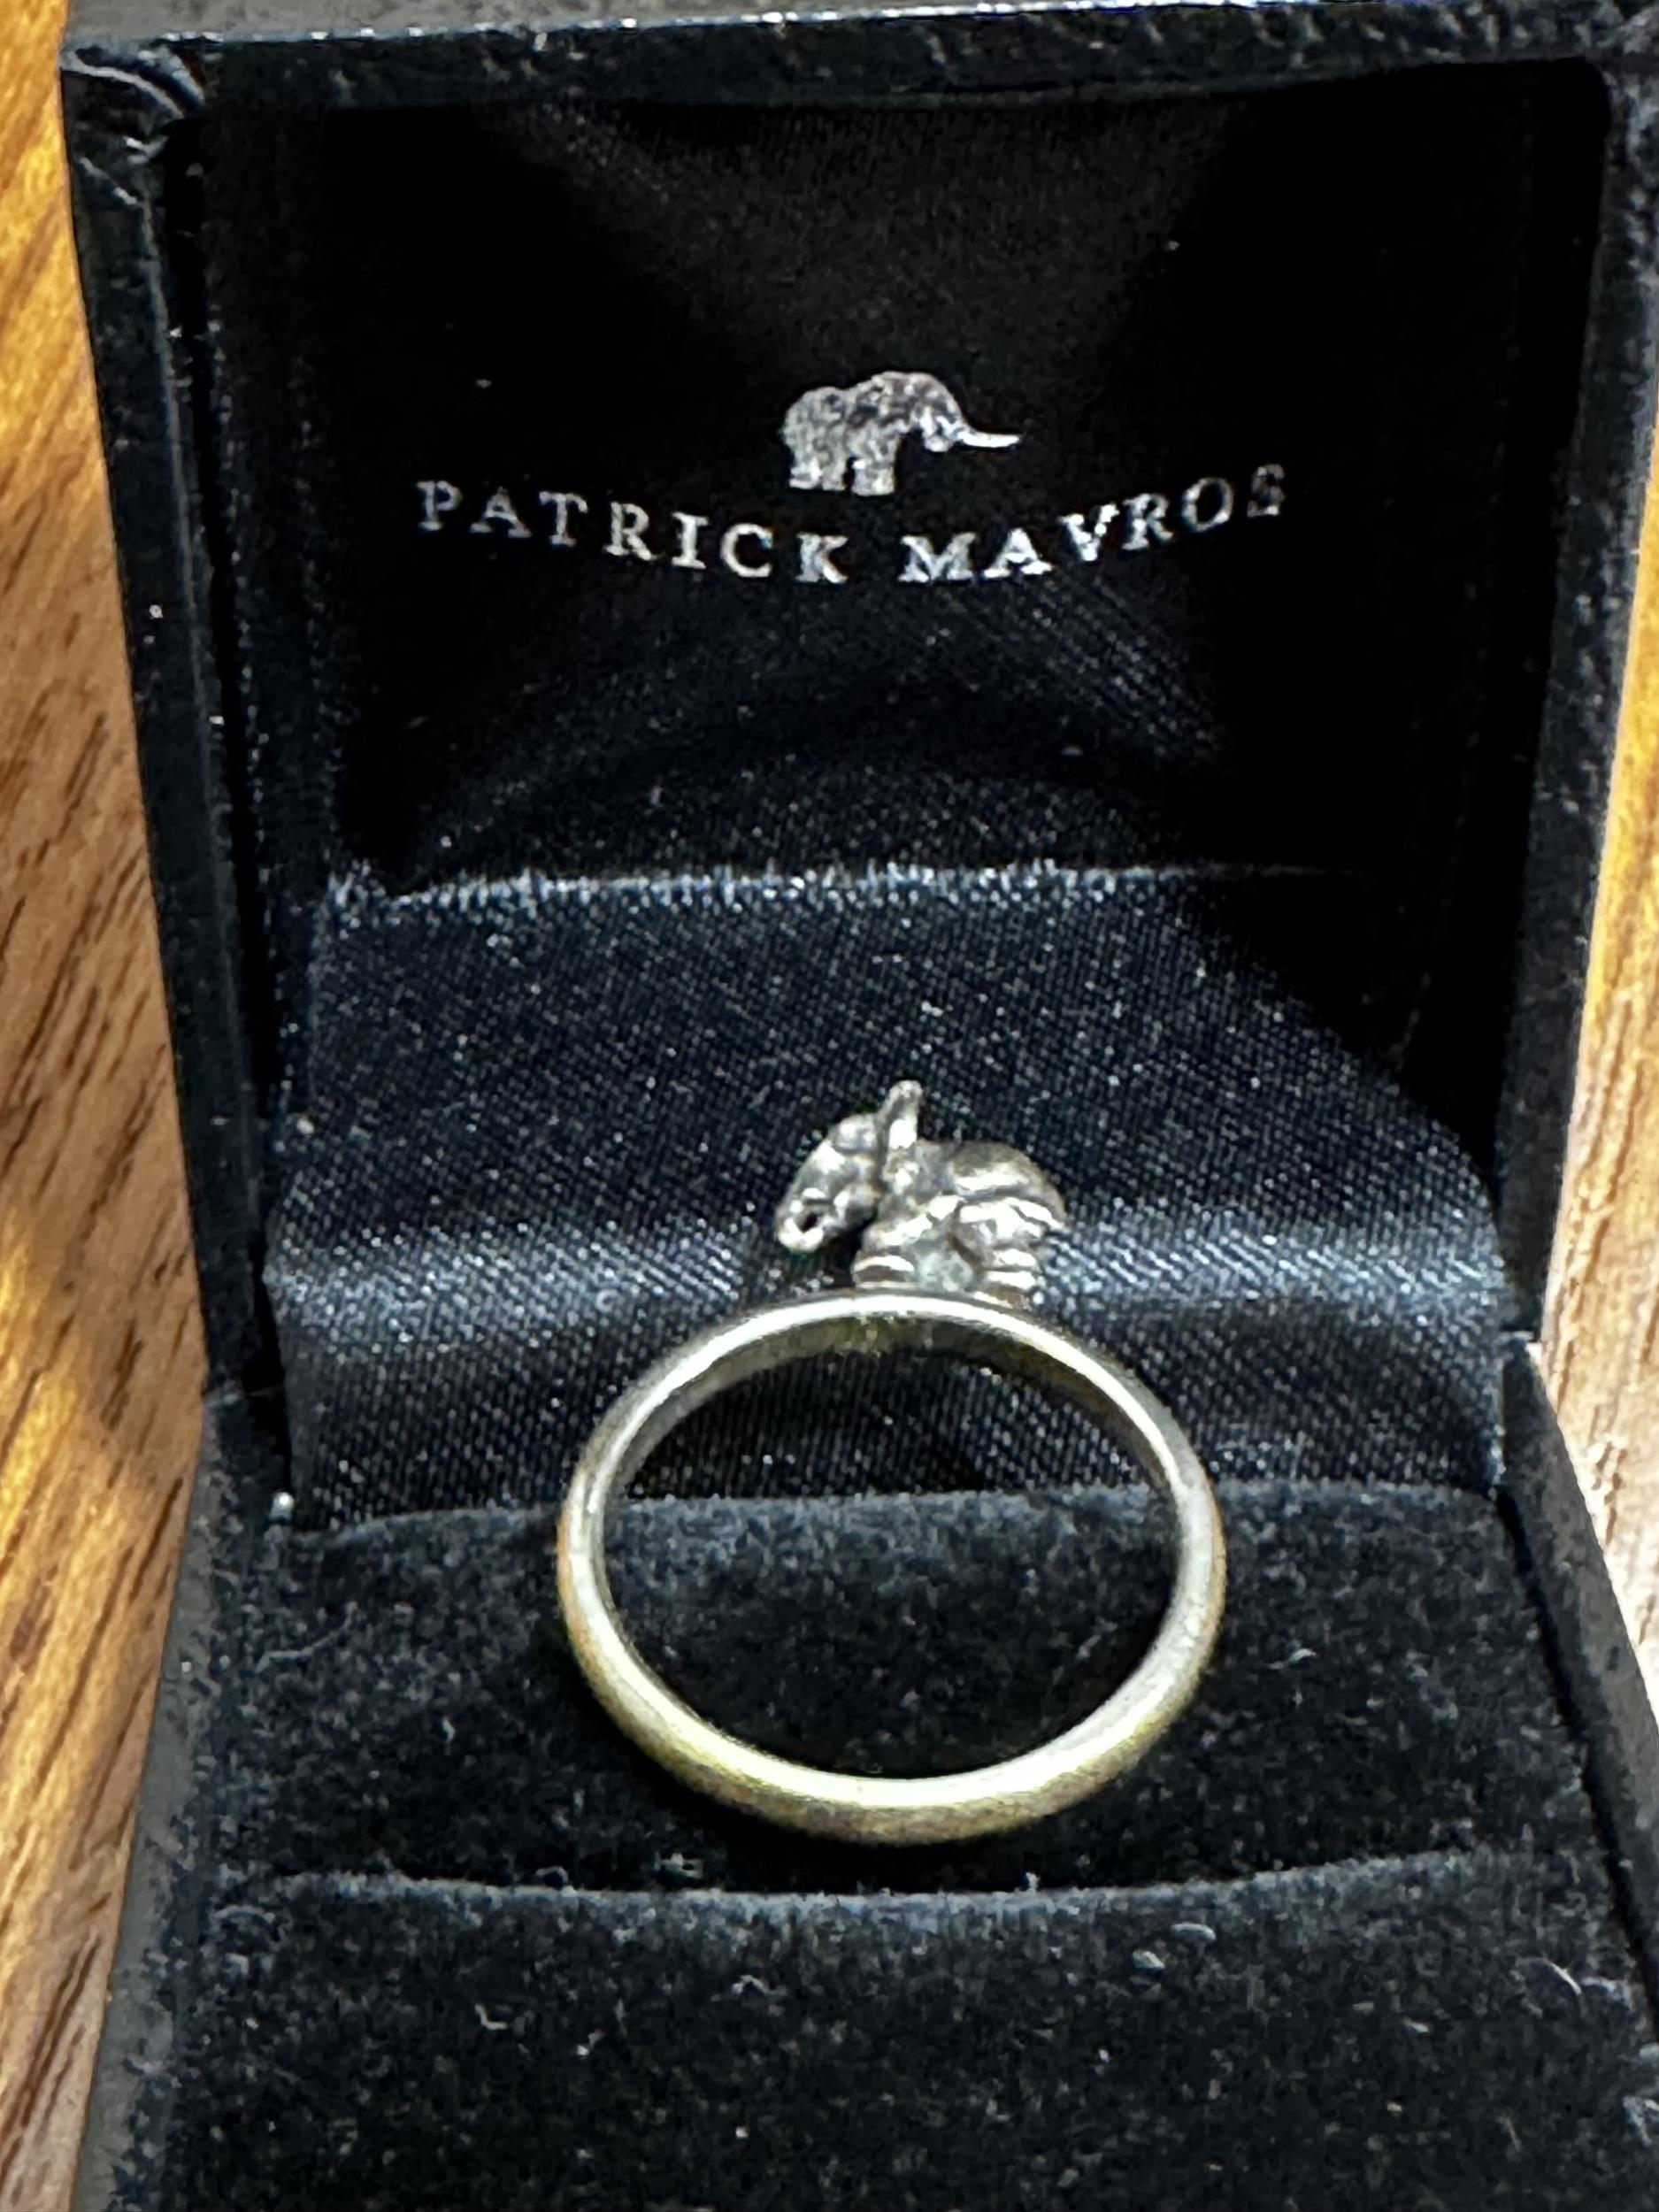 A PATRICK MAVROS ring with elephant design to top, stamped 925, in original Patrick Mavros box, 2.9g